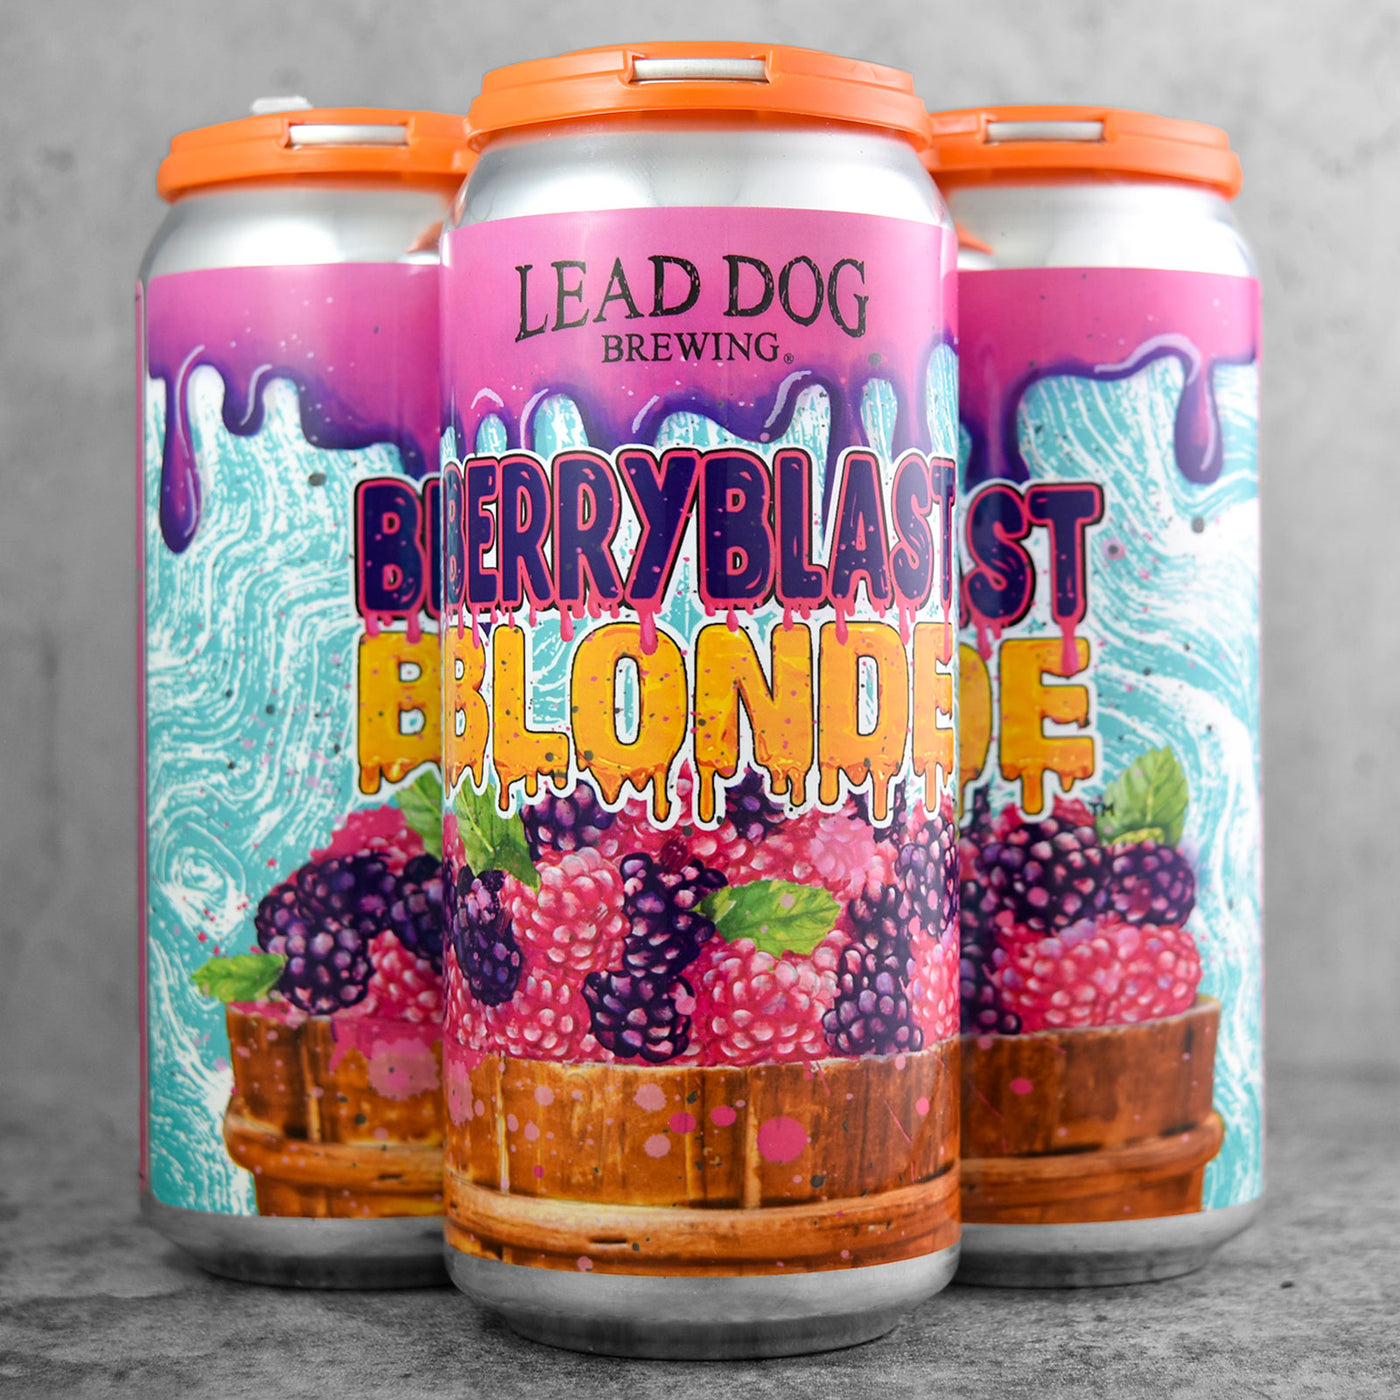 Lead Dog Berry Blast Blonde